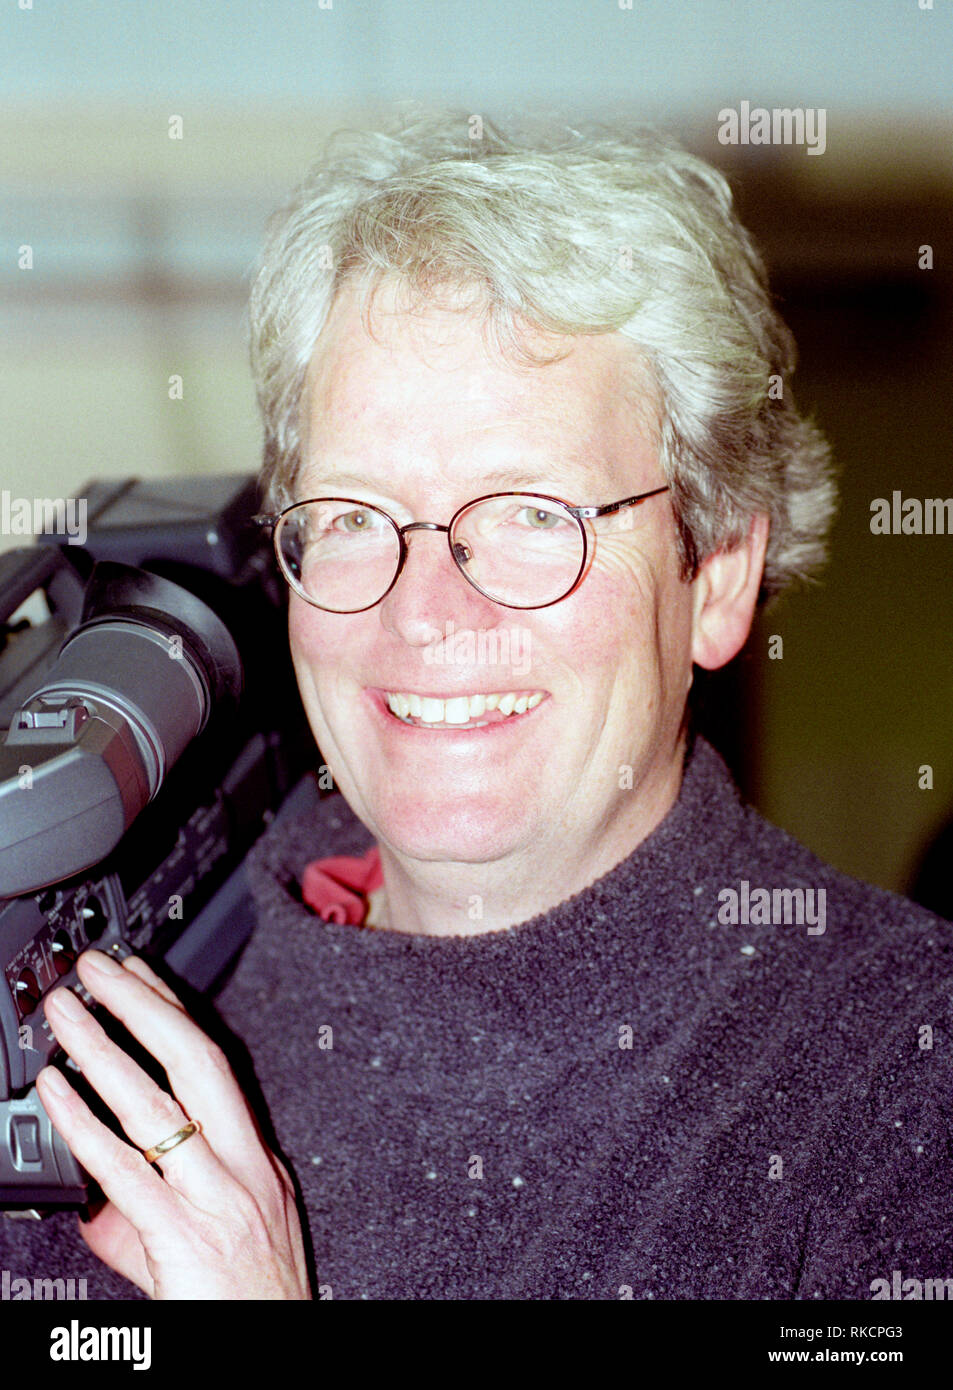 Nigel Farreii 1953 - 2011.  A documentary film-maker who pioneered 'docu-soaps' Stock Photo